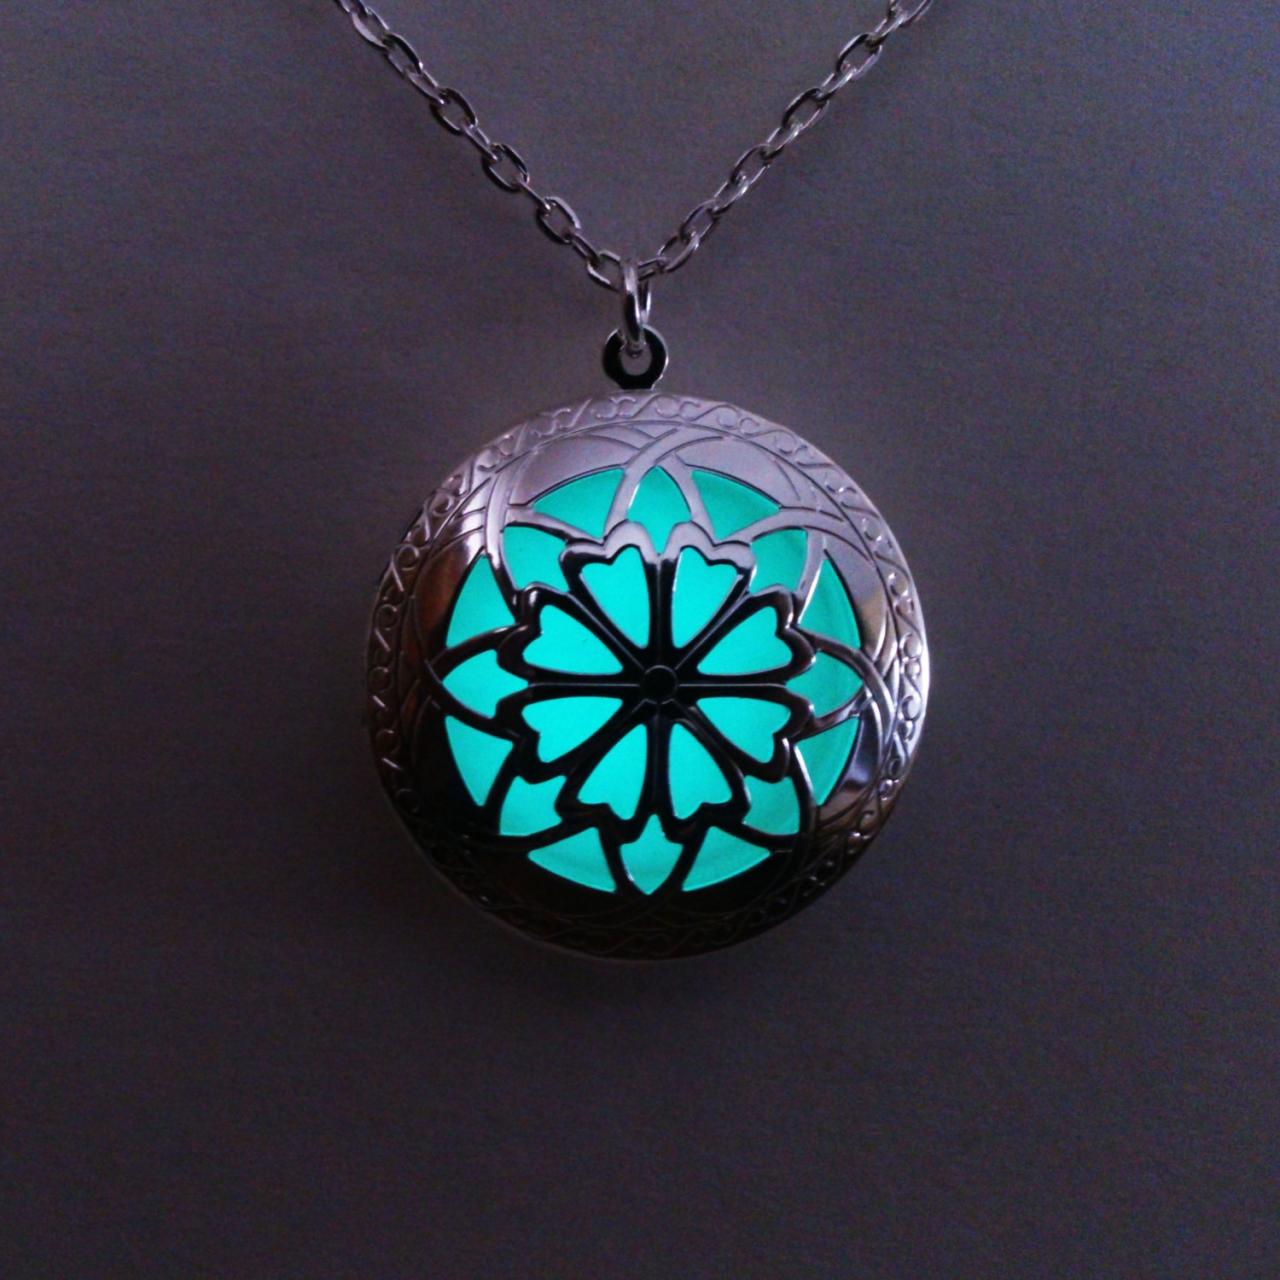 Glowing Locket Necklace- Aqua Glowing Jewelry - Glow In The Dark Pendant - Glowing Pendant - Womens Gift - Christmas - Birthday Gift